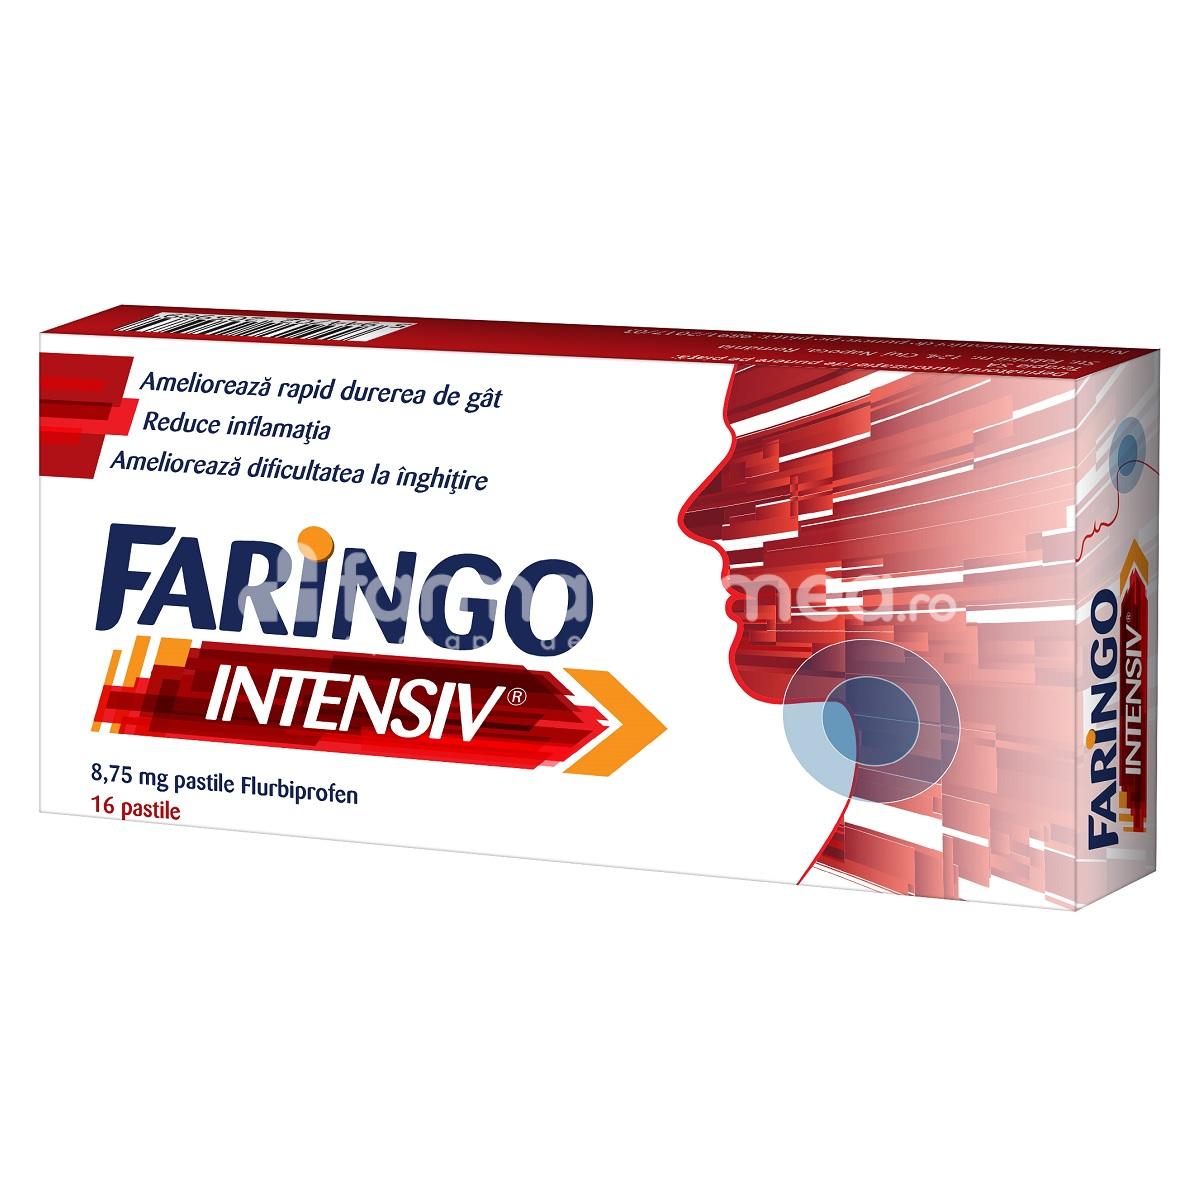 Durere oro-faringiană OTC - Faringo intensiv 8.75mg, contine flurbiprofen, cu efect antiiflamator, indicat in durere in gat, de la 12 ani, 16 pastile, Terapia, farmaciamea.ro